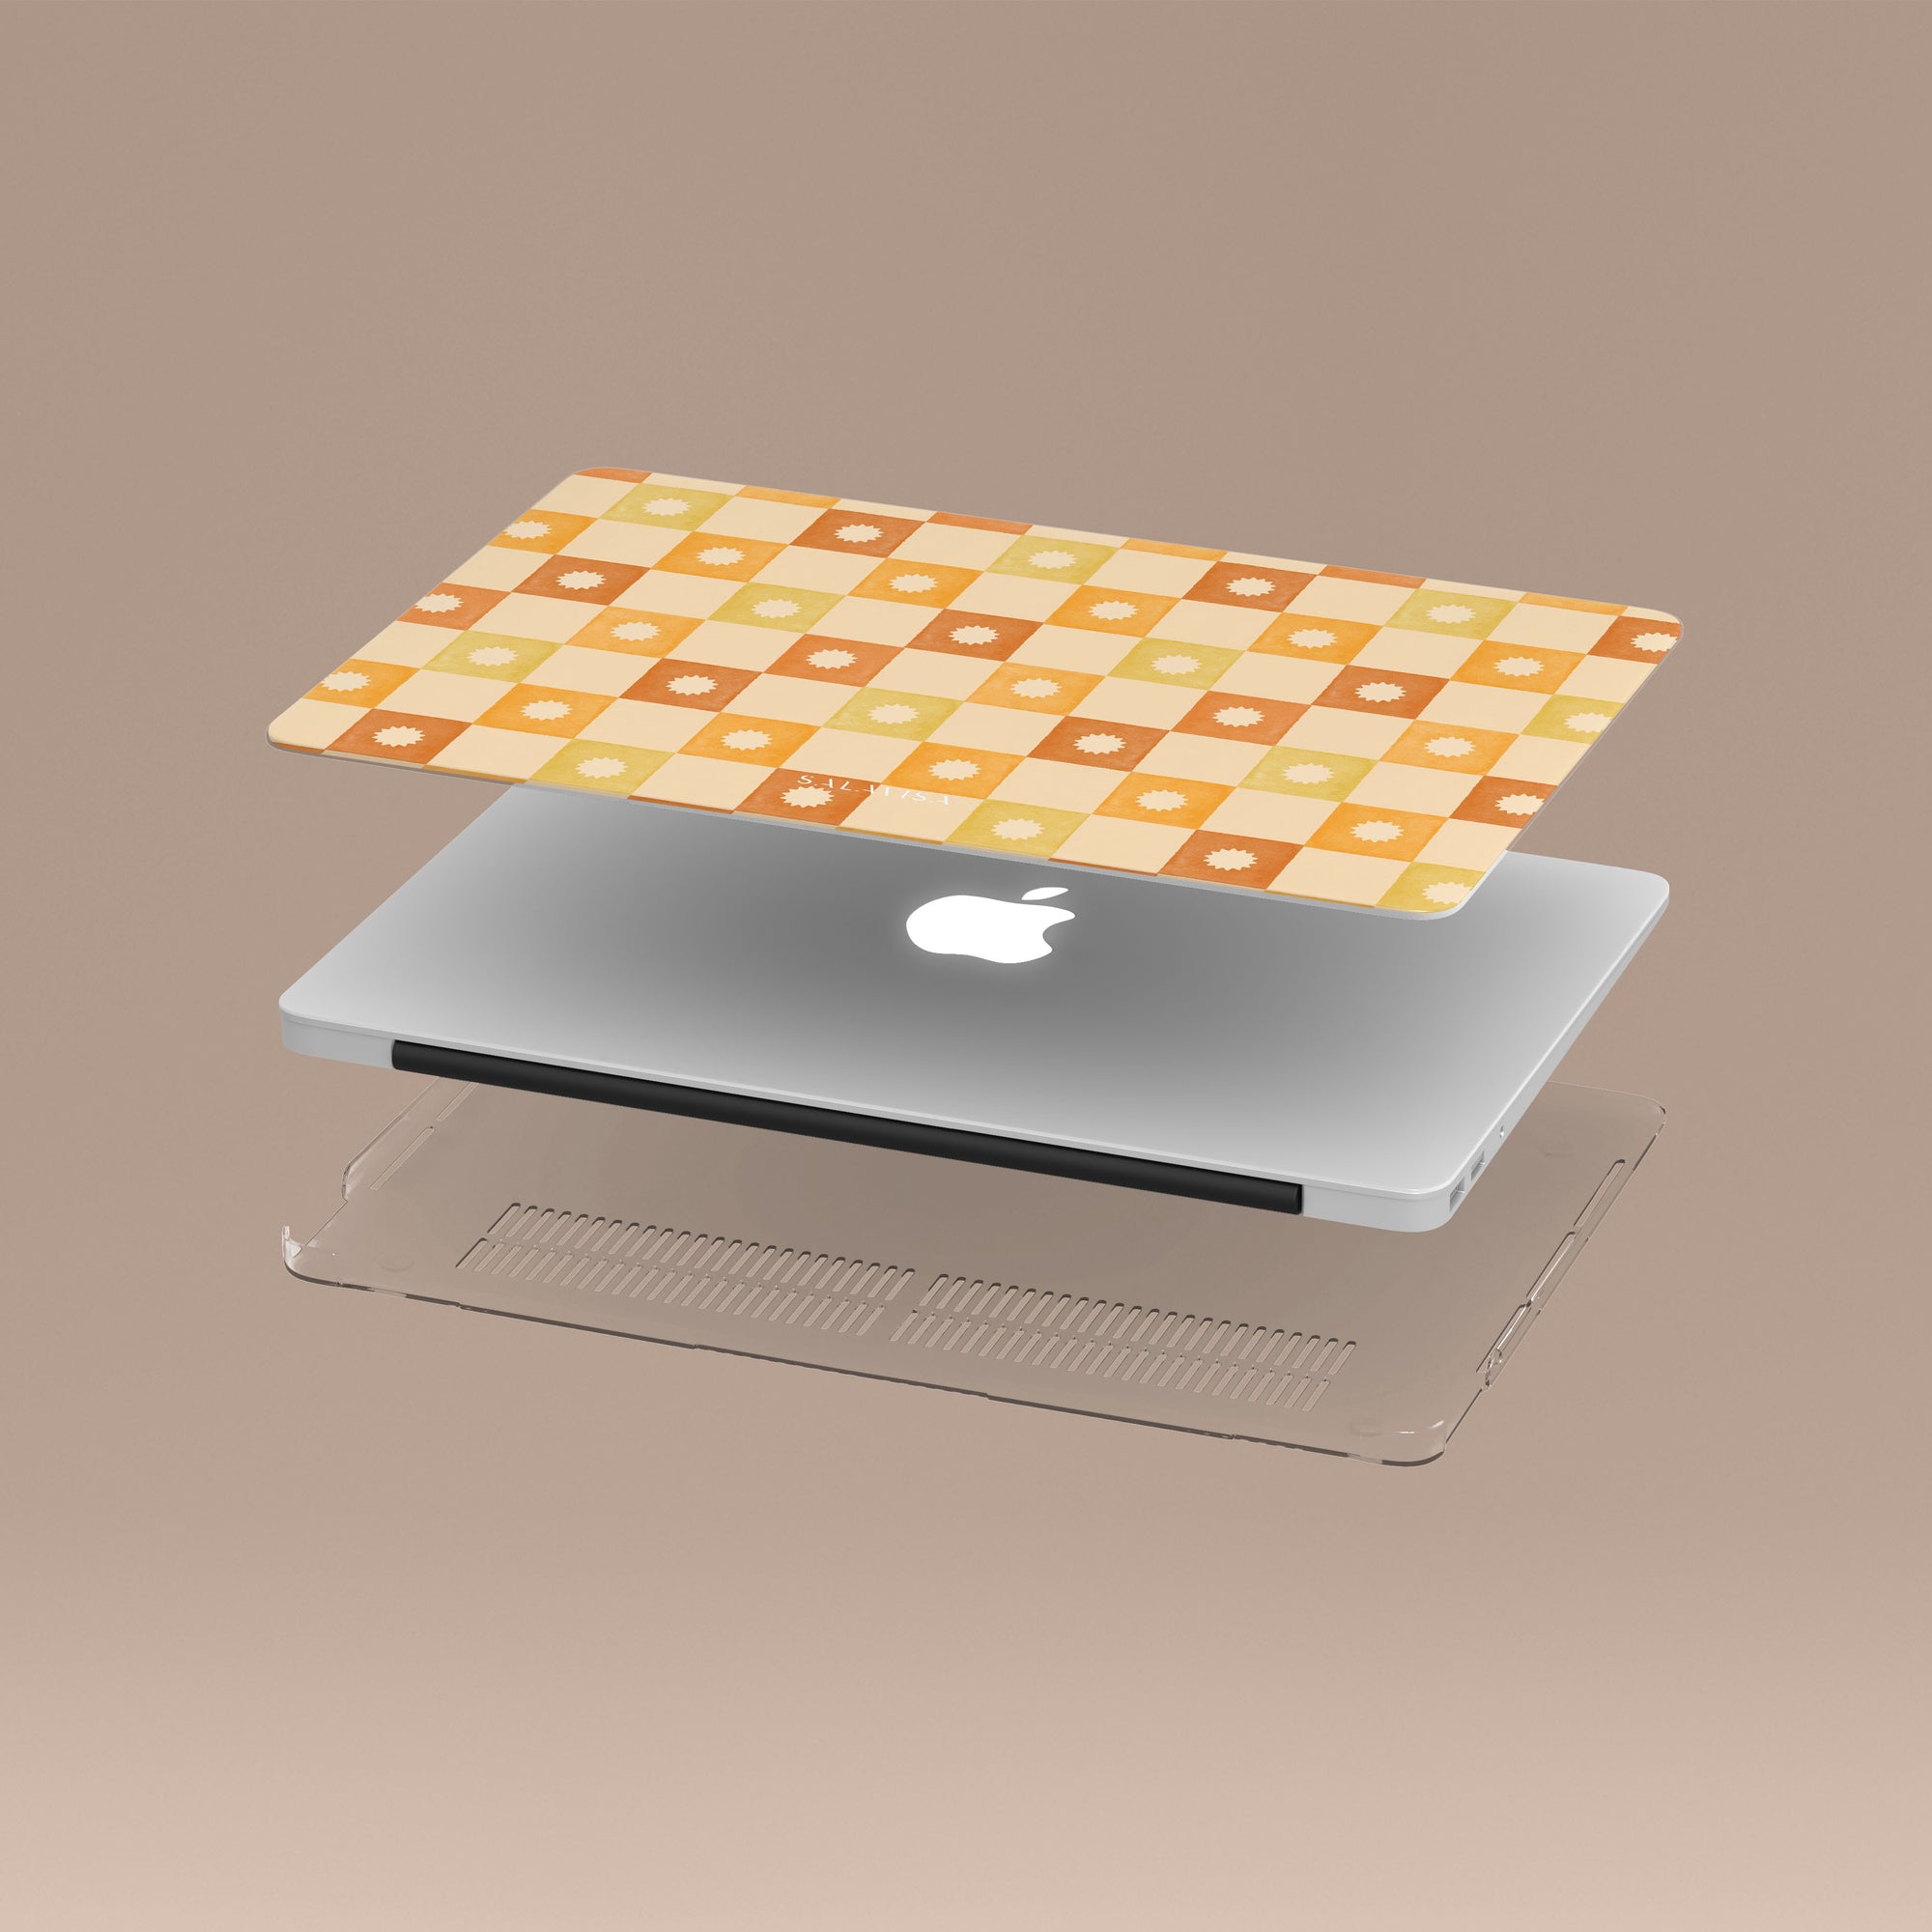 Checkered Elegance MacBook Case MacBook Cases - SALAVISA